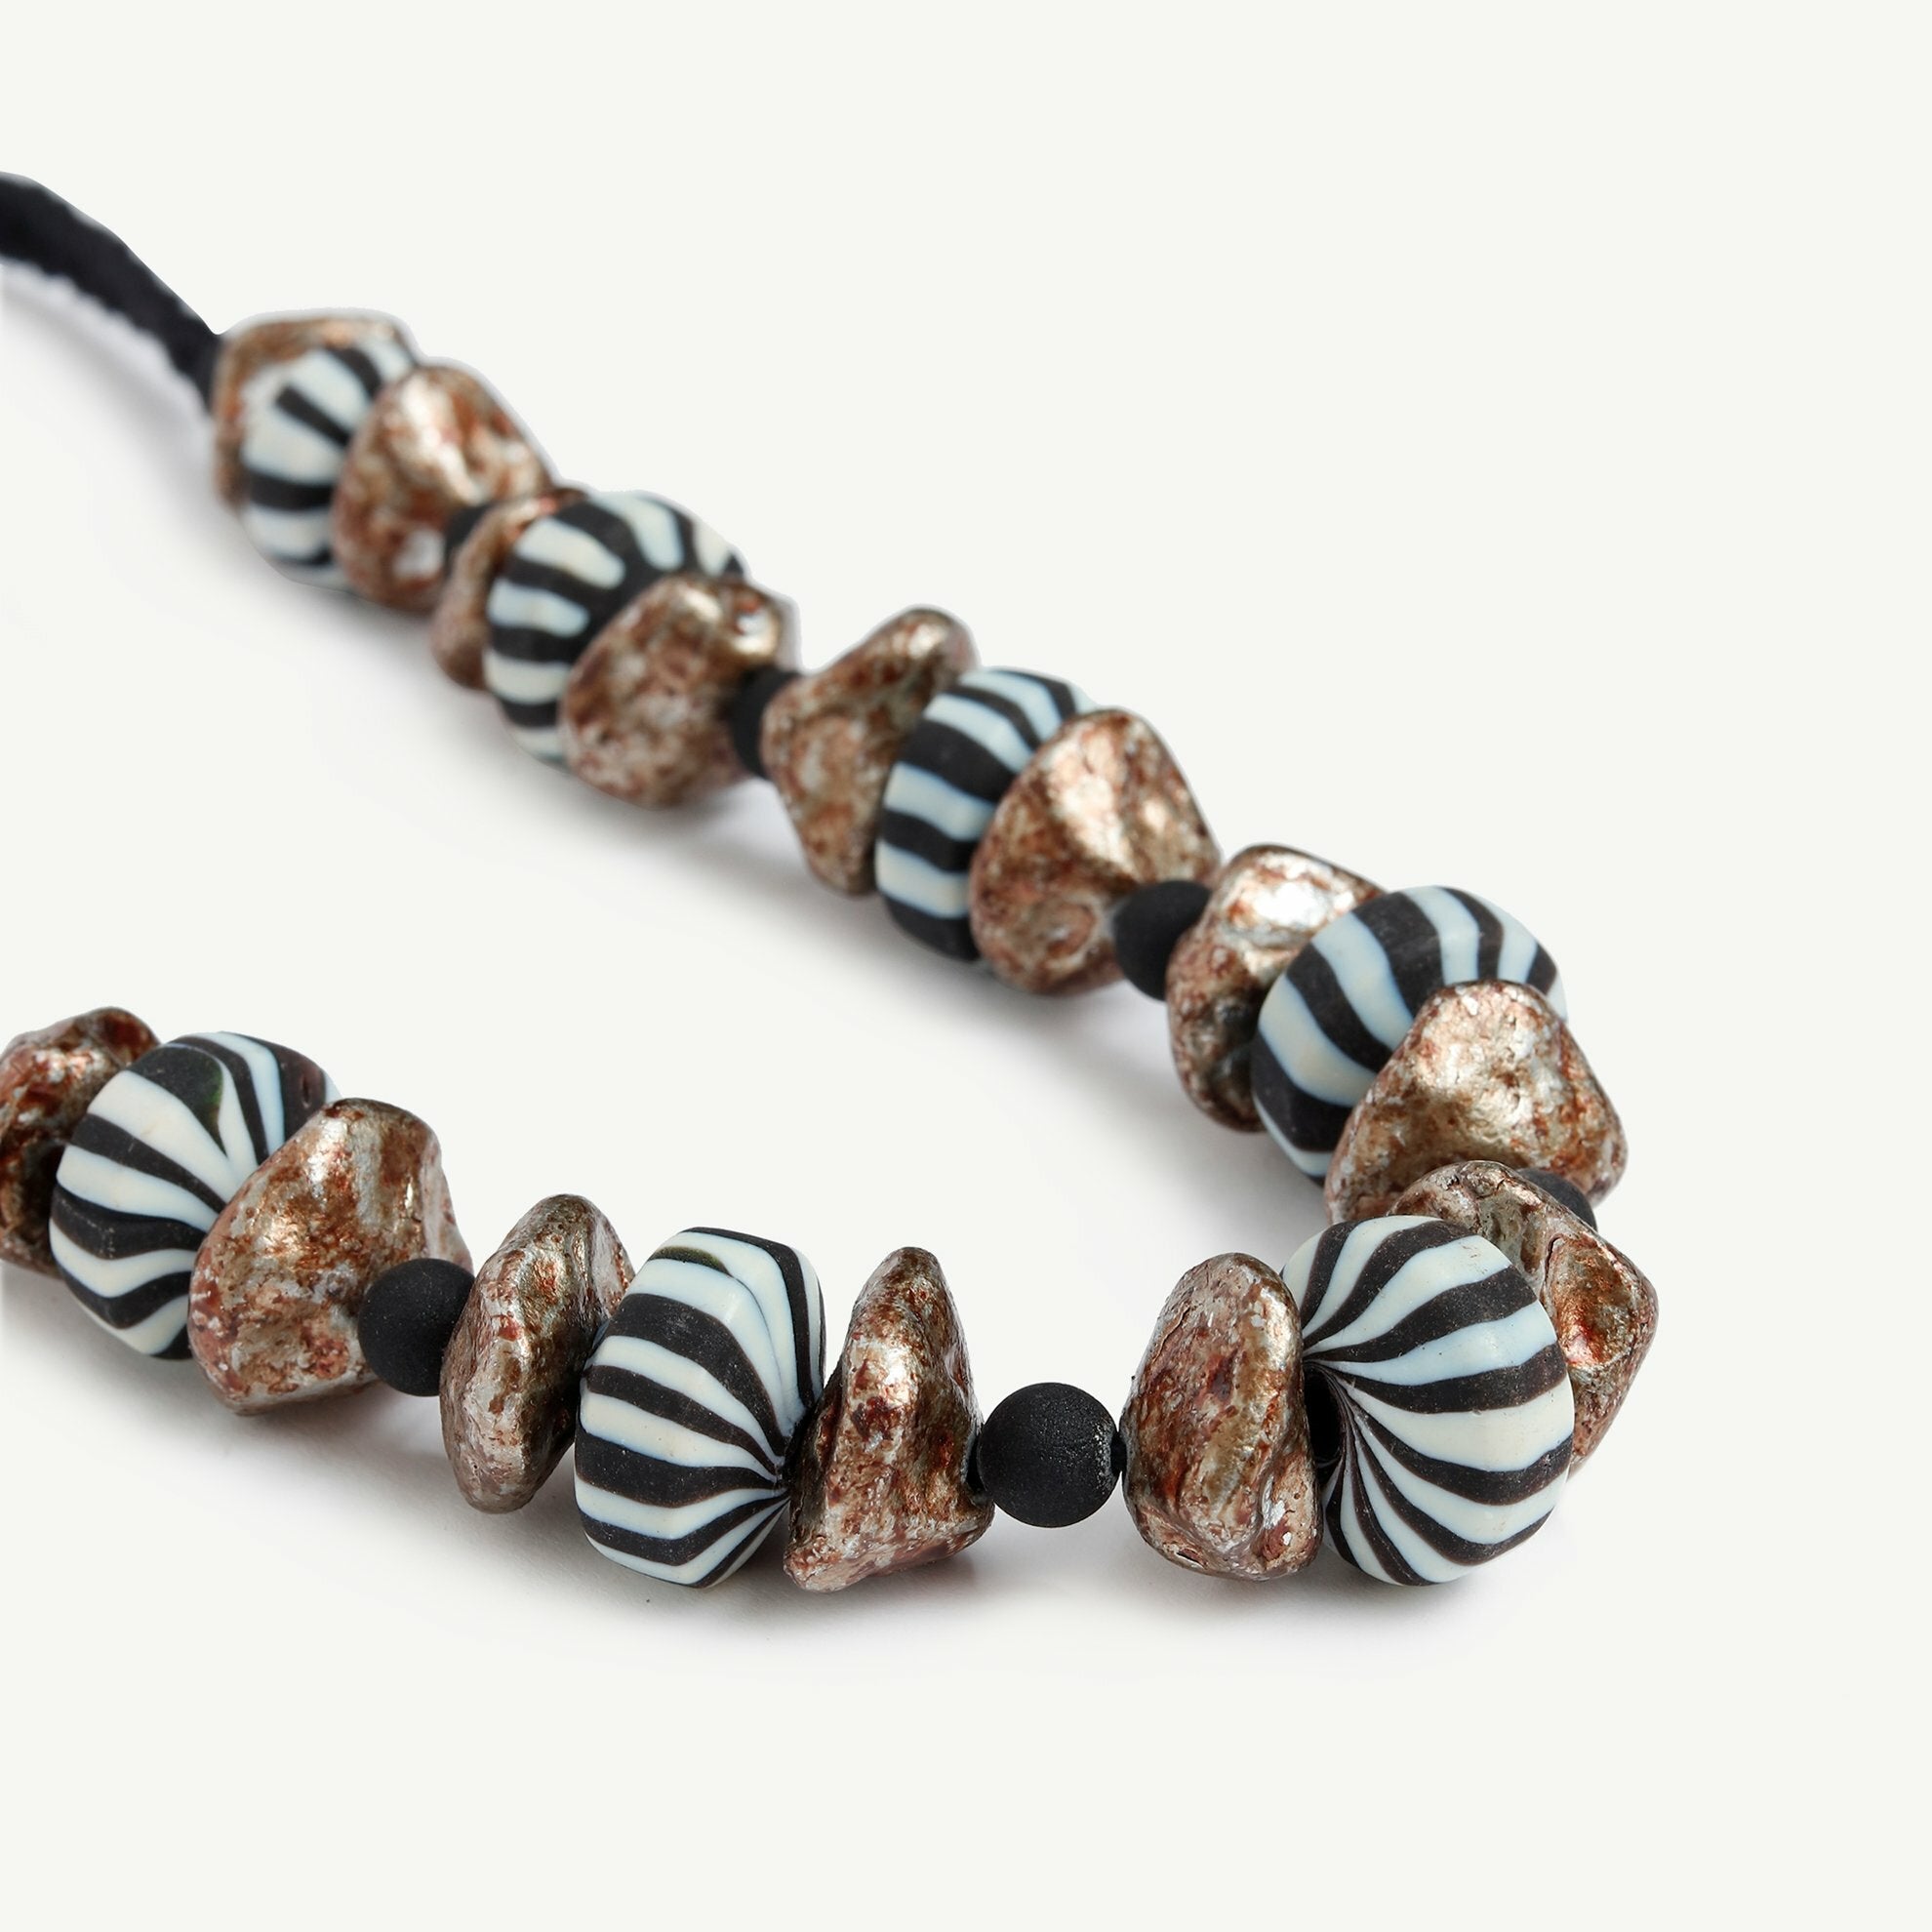 Zebra Striped Natural Stone Necklace